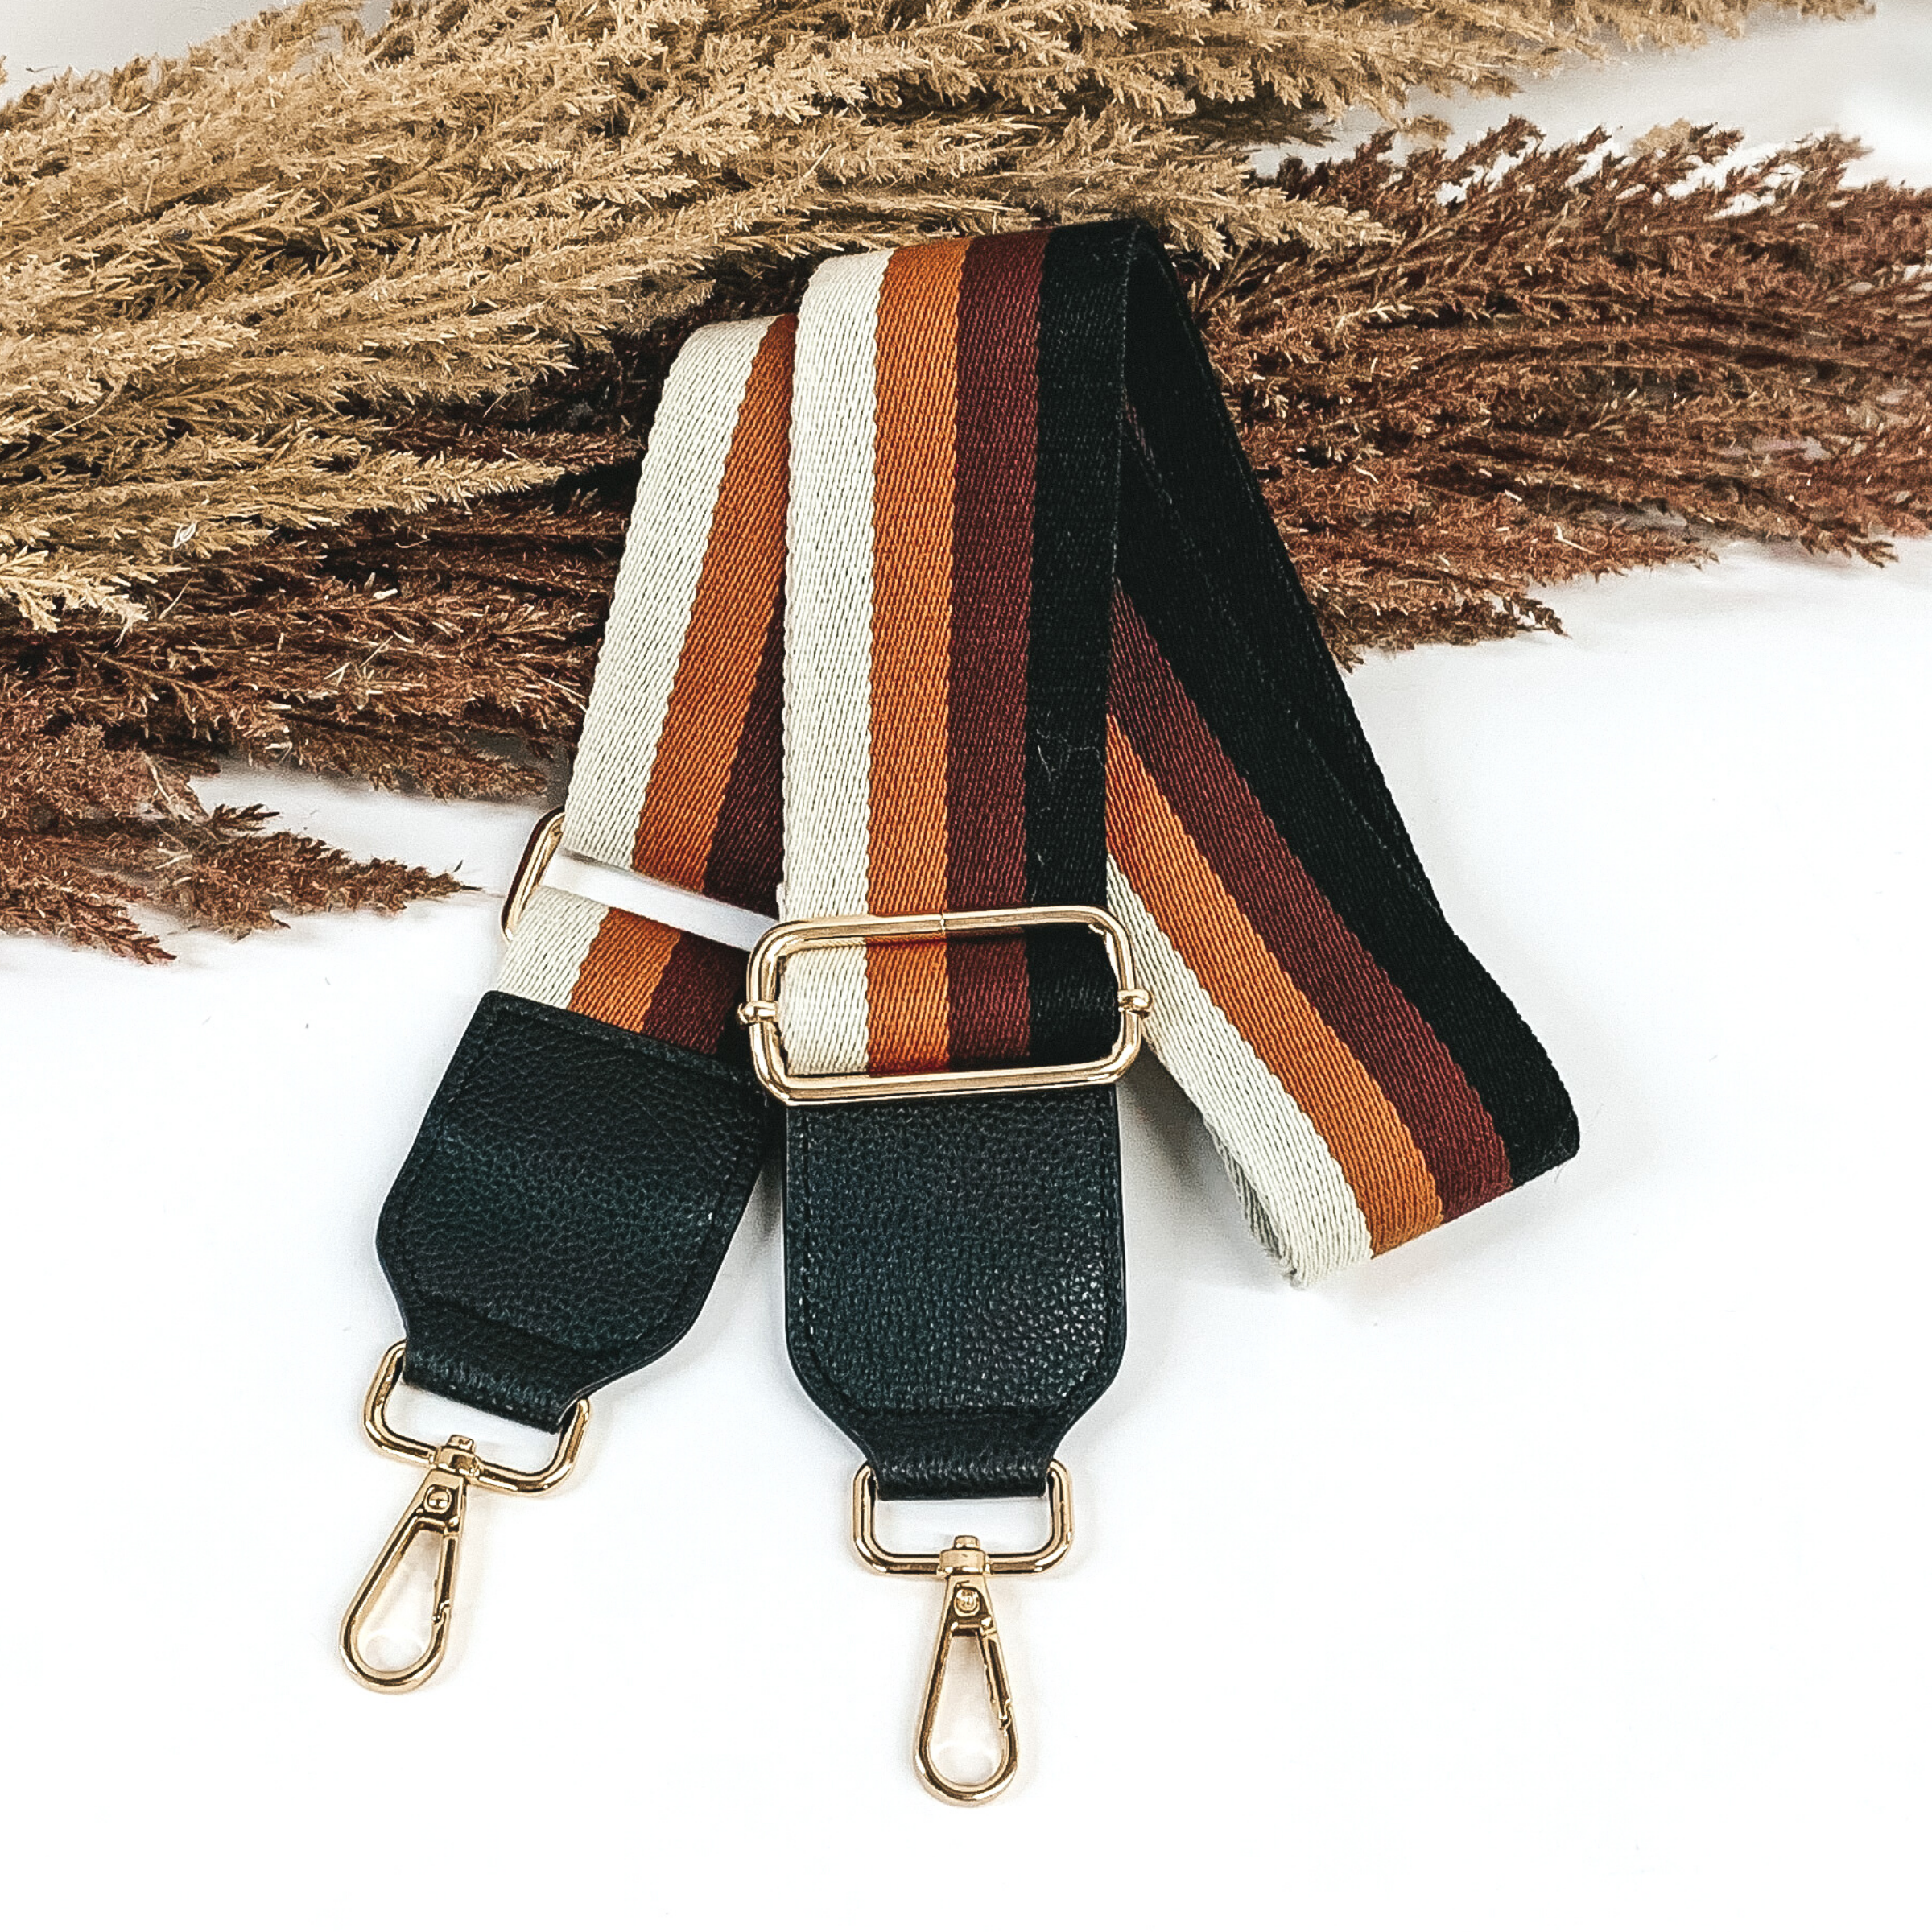 cream, brown, maroon, and black striped removeable purse strap